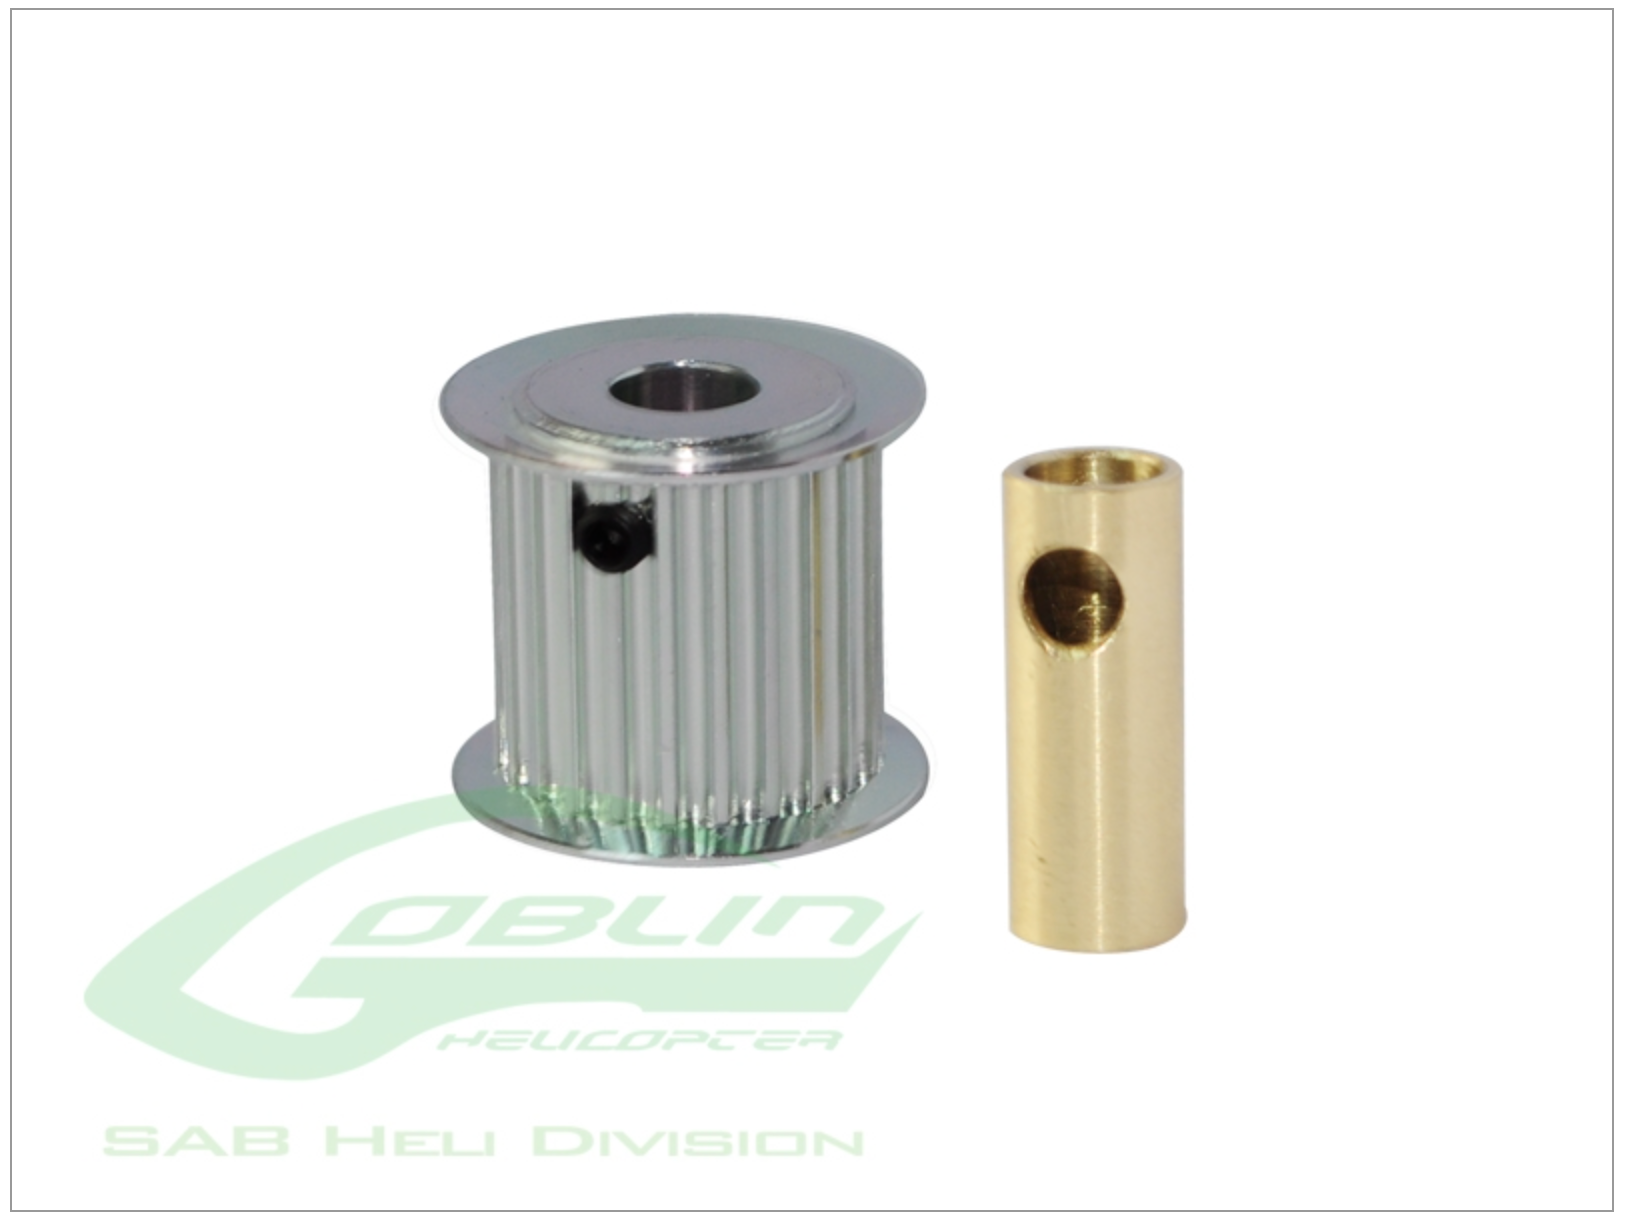 H0175-22-S.Aluminum Motor Pulley 22T (for 6/8mm motor shaft)